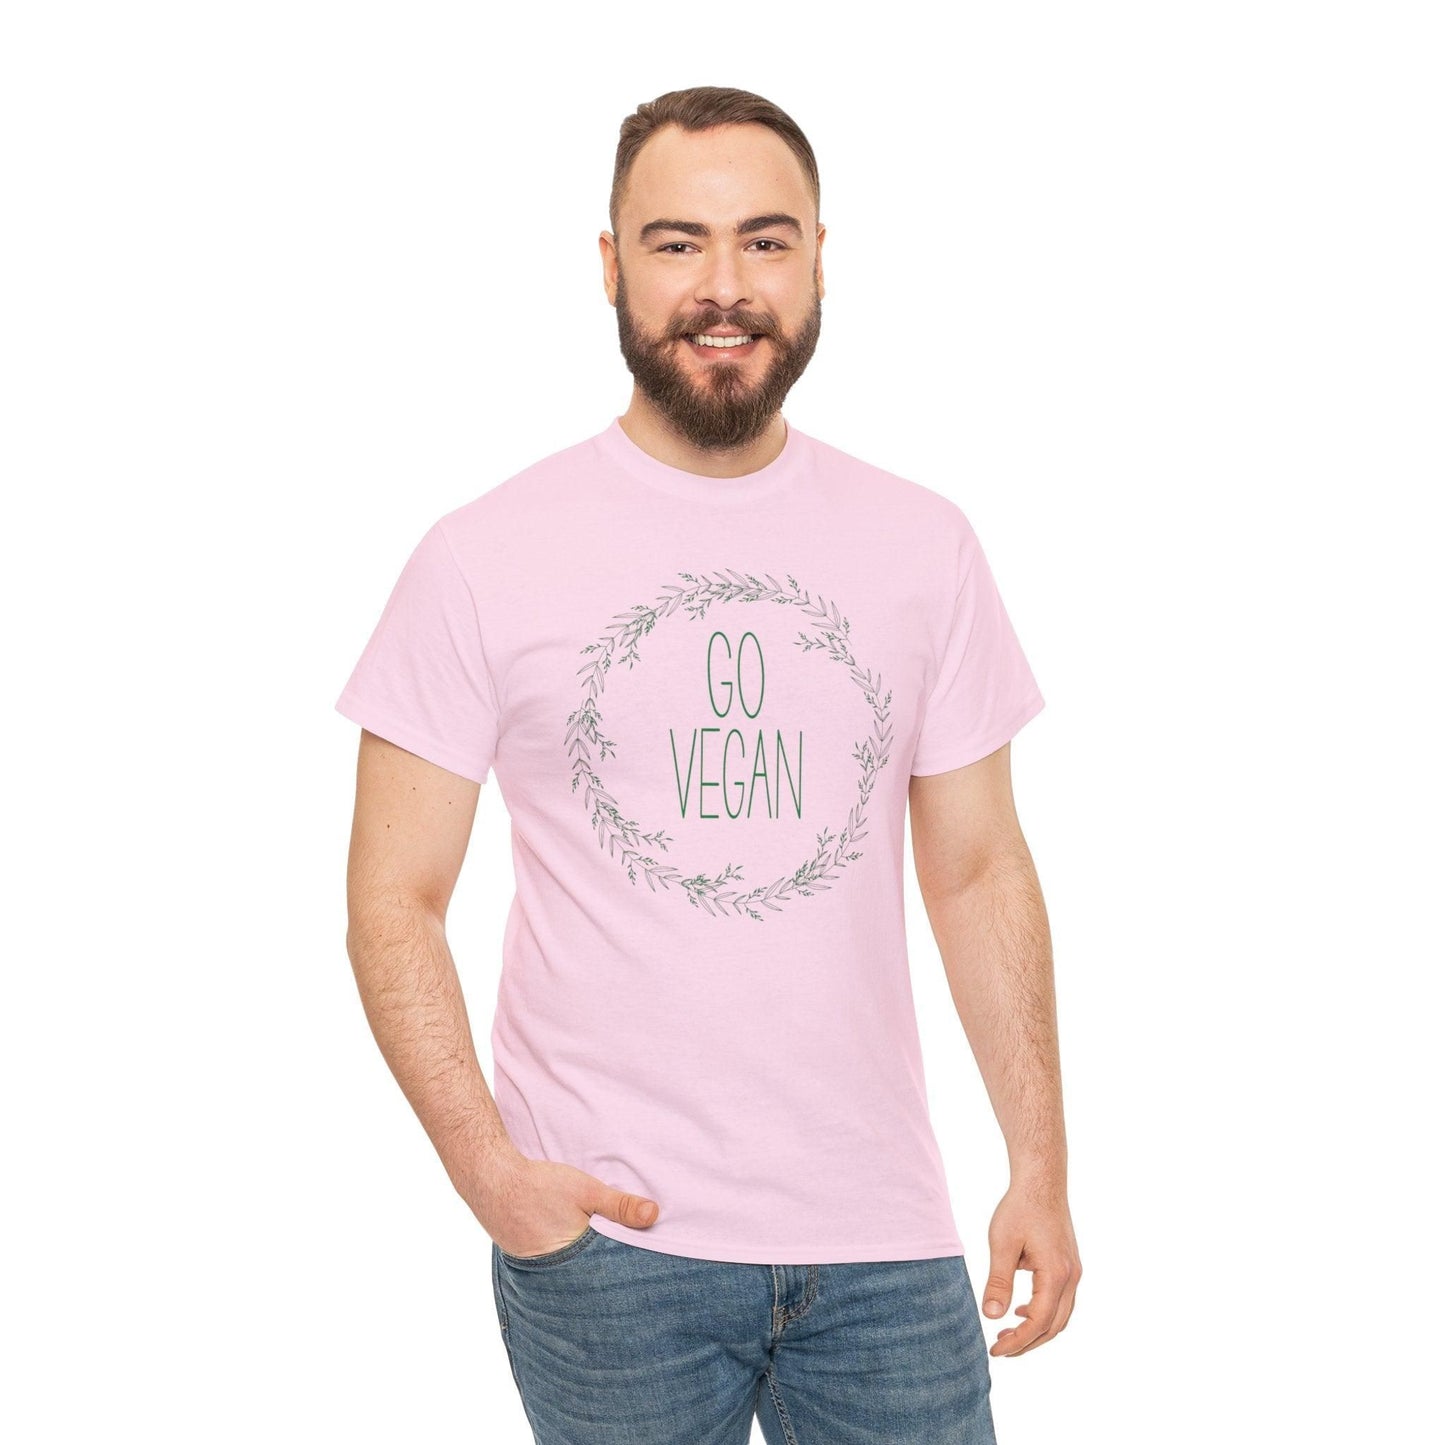 Go Vegan Unisex Tee T-Shirt Light Pink S 